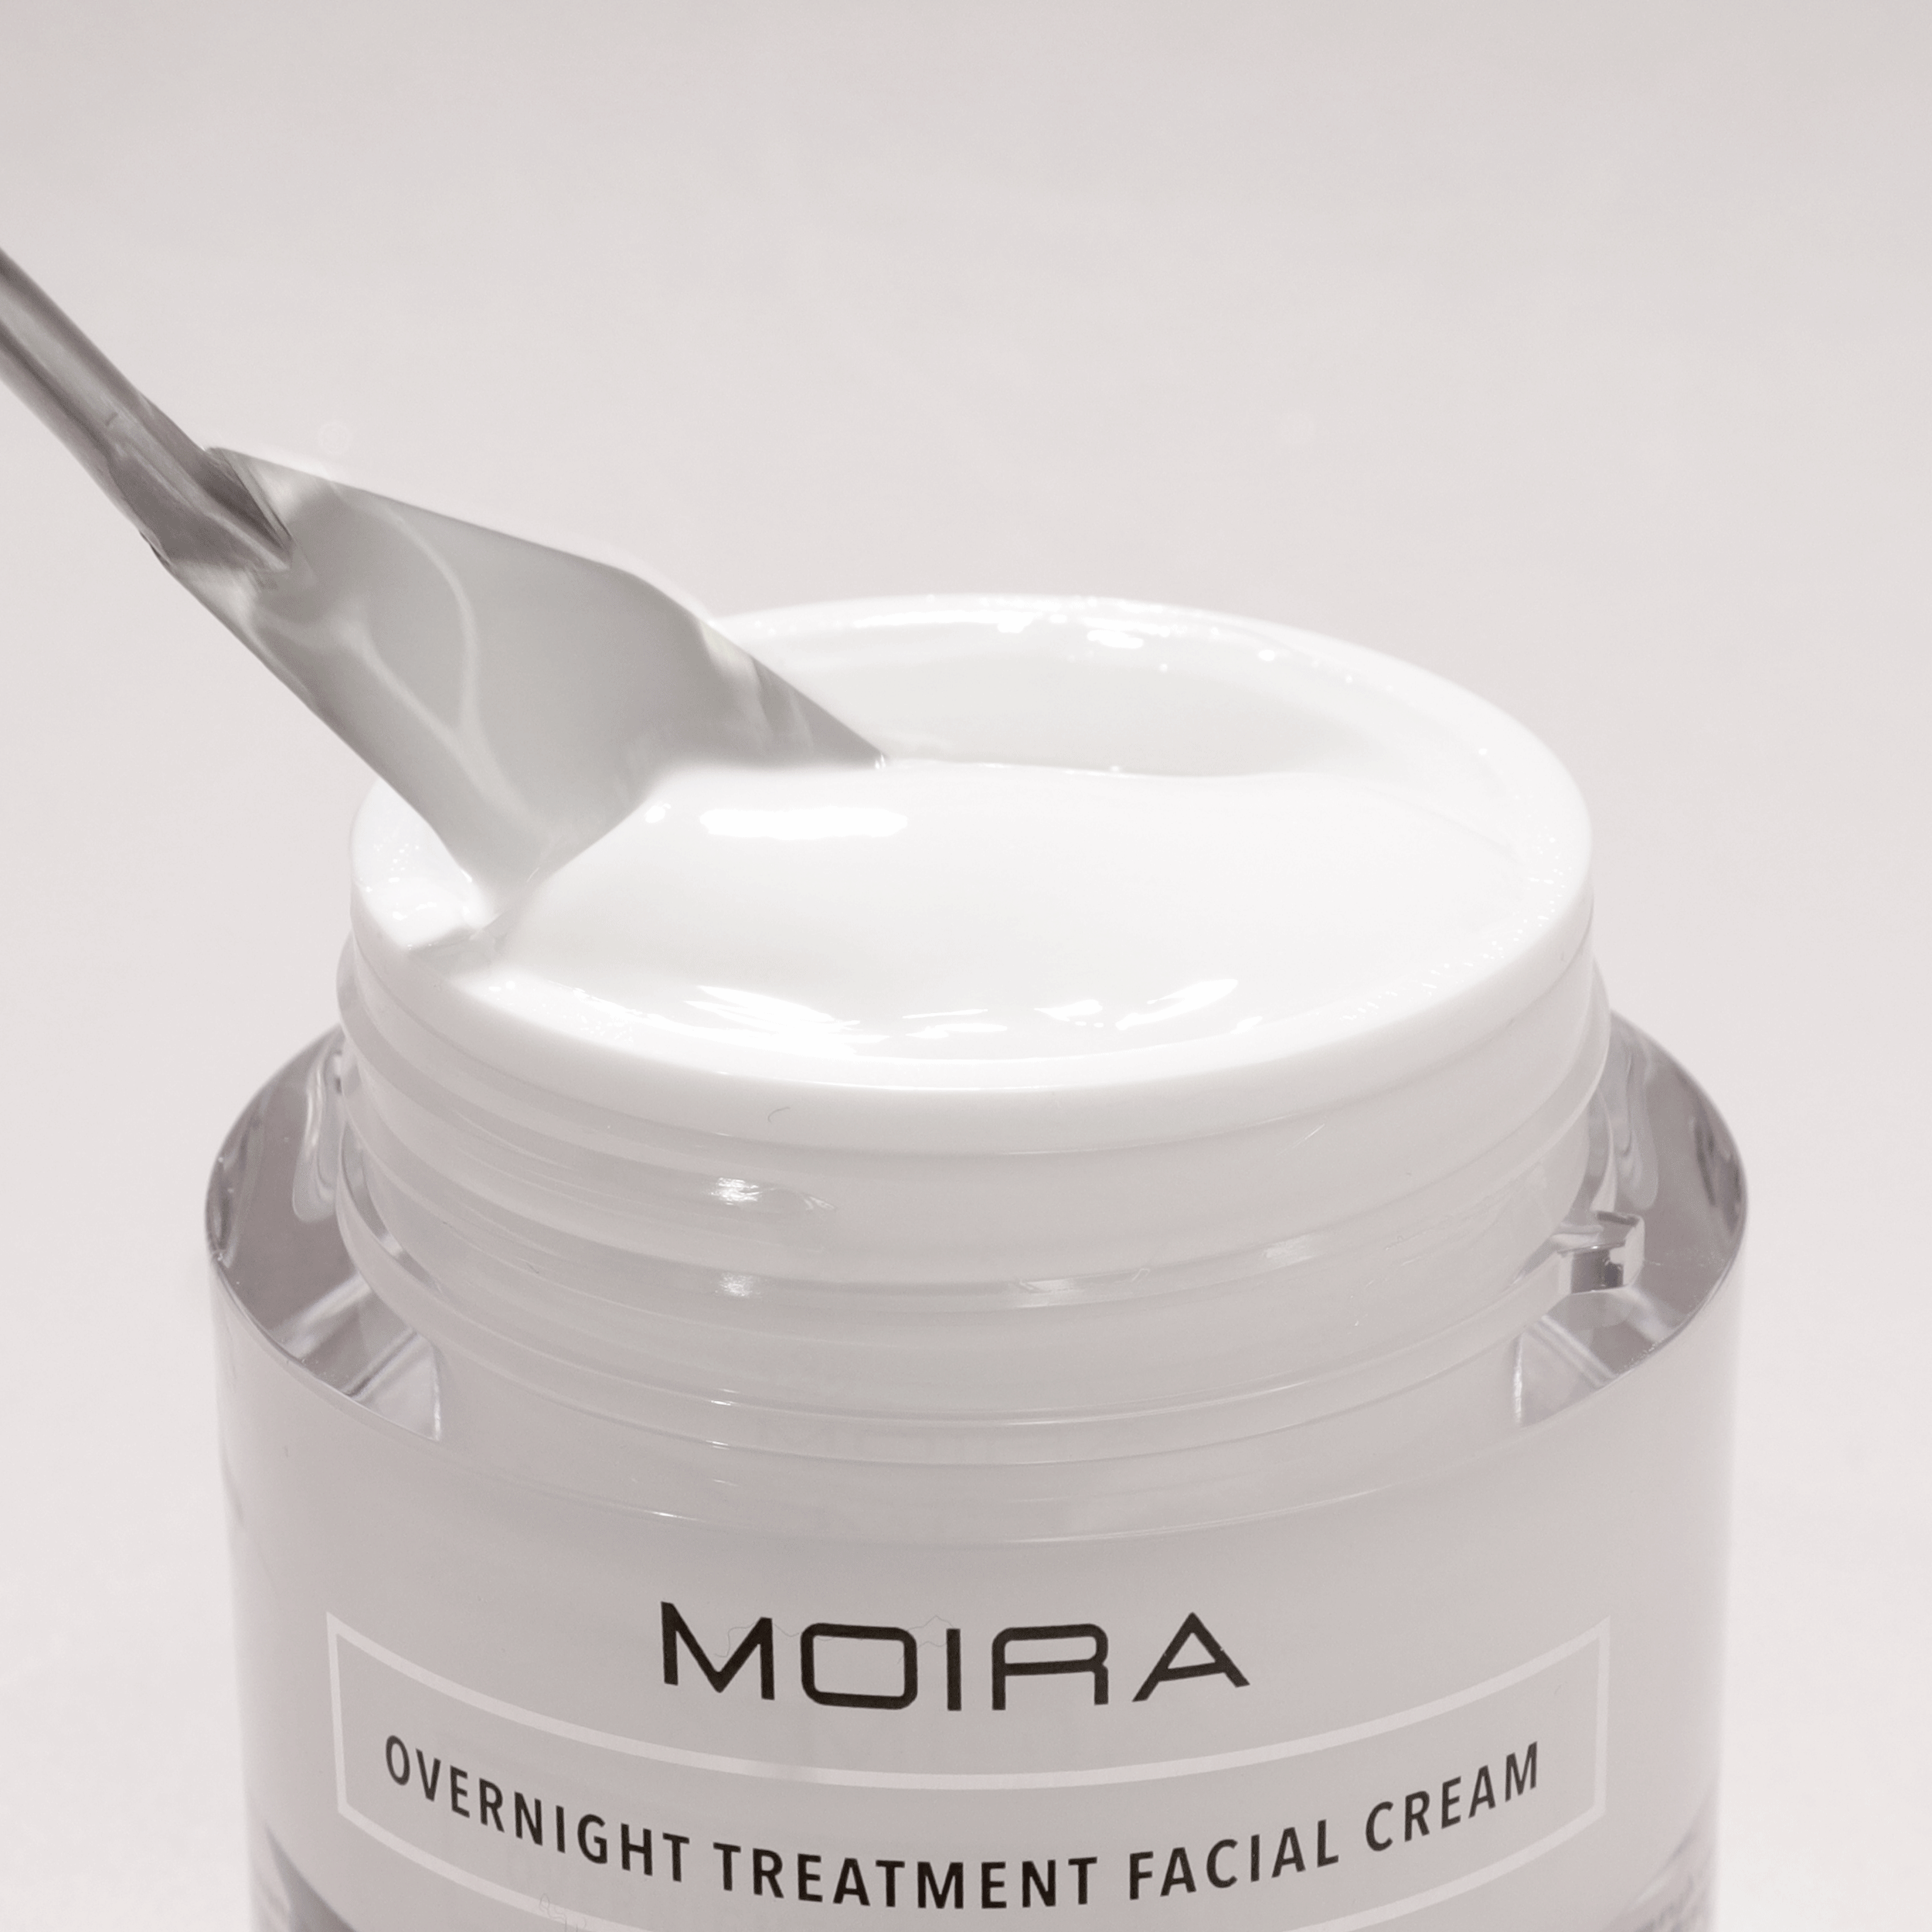 Overnight Treatment Facial Cream